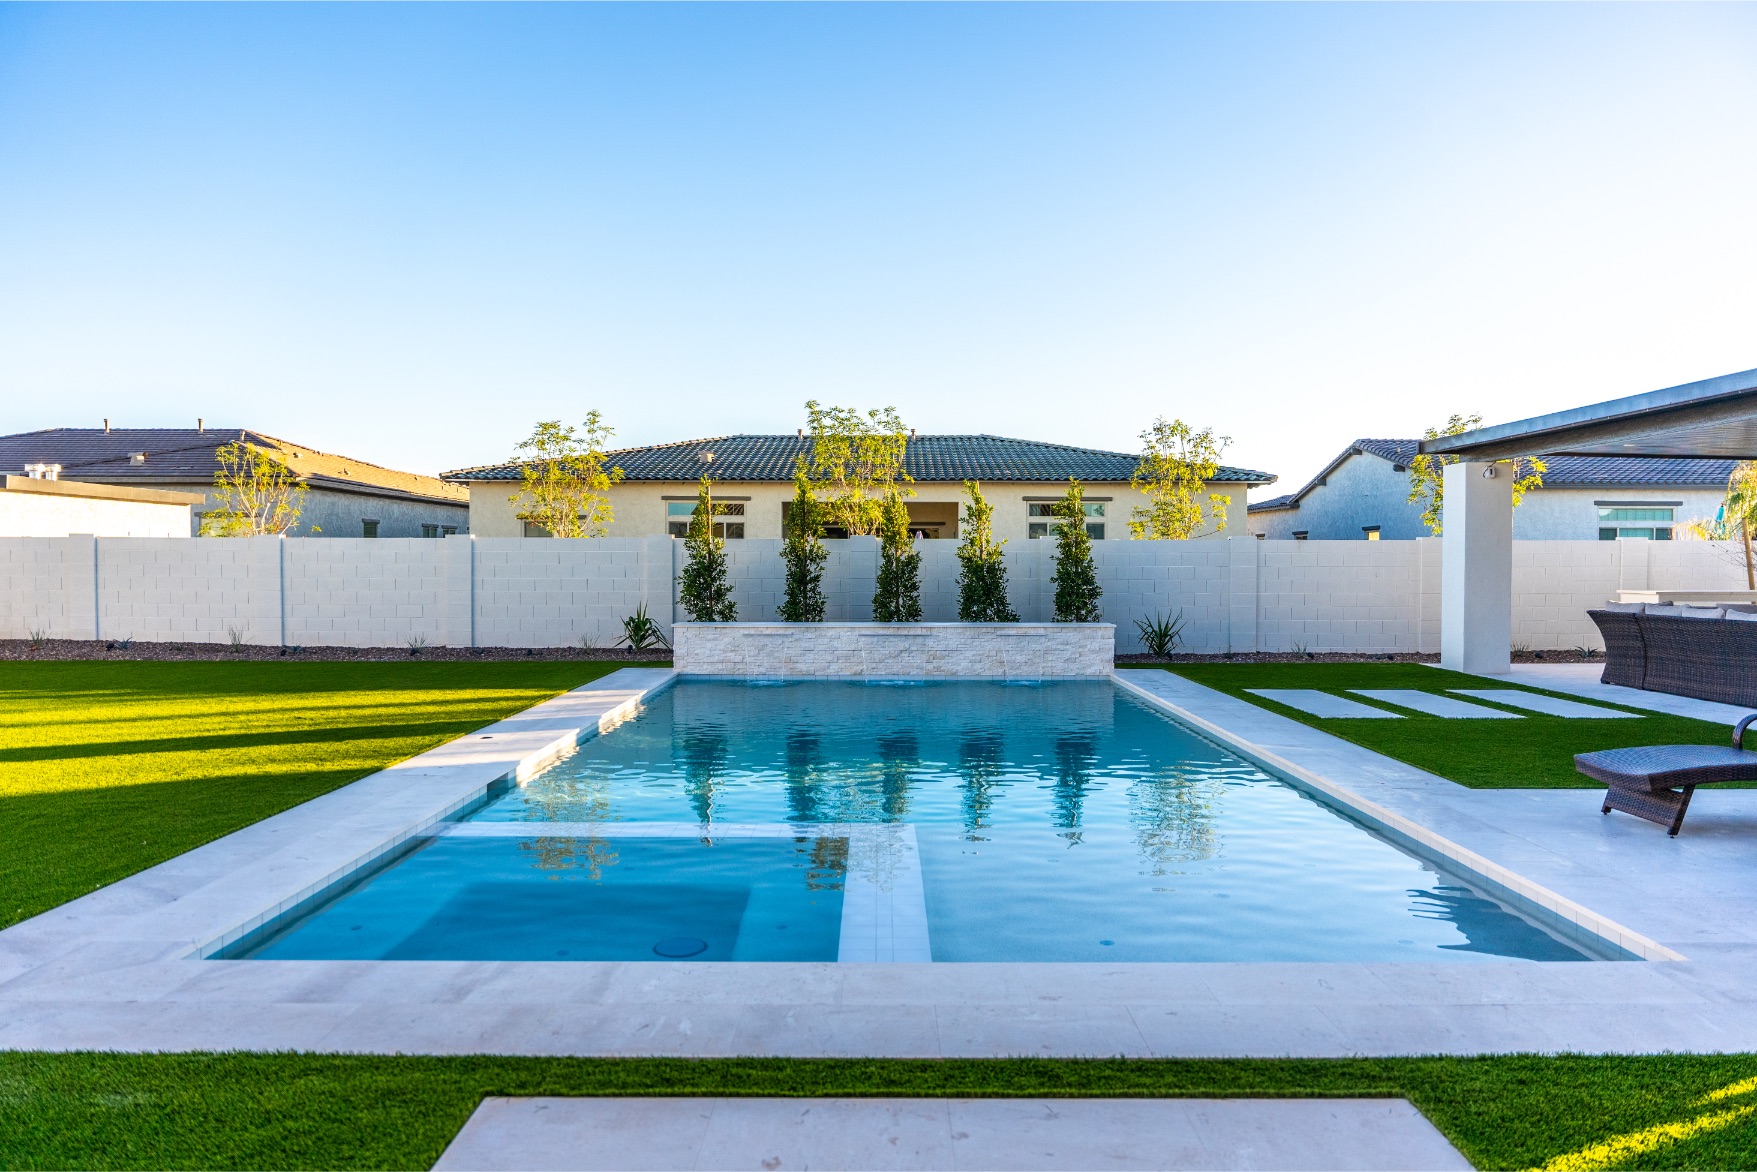 Luxury Pool in a gorgeous backyard